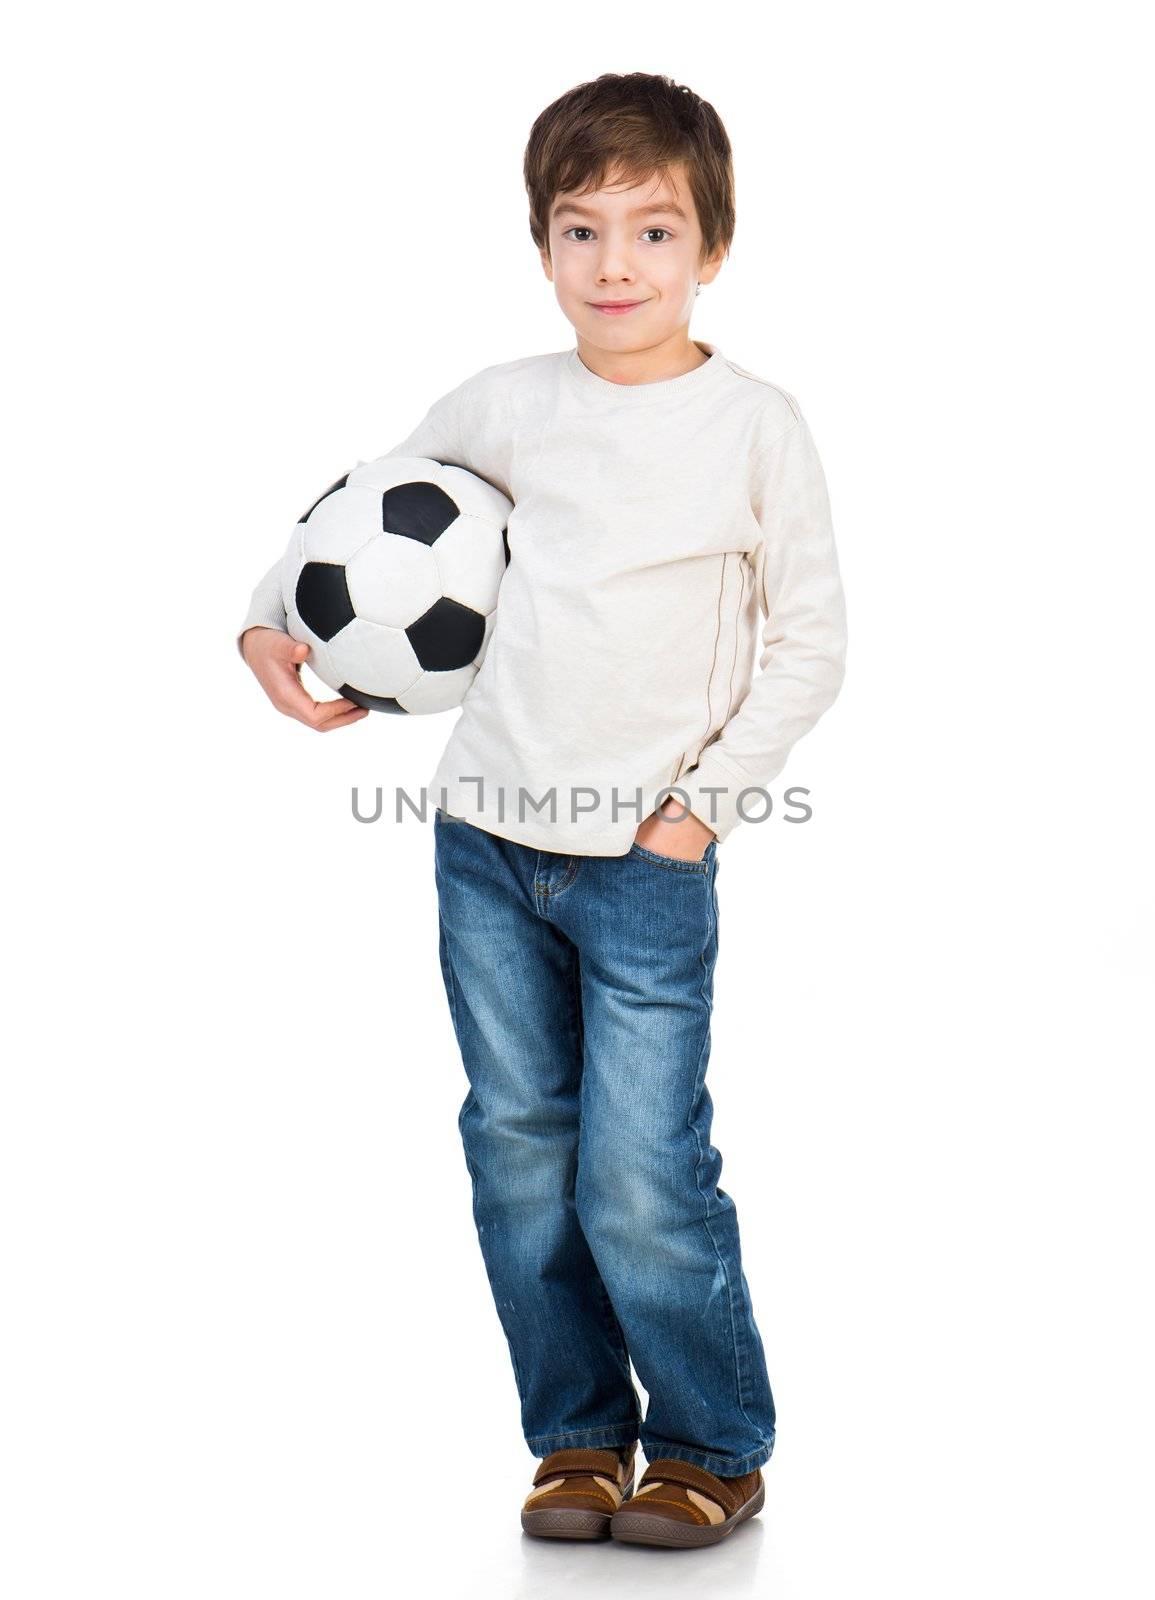 Little boy playing soccer ball by GekaSkr